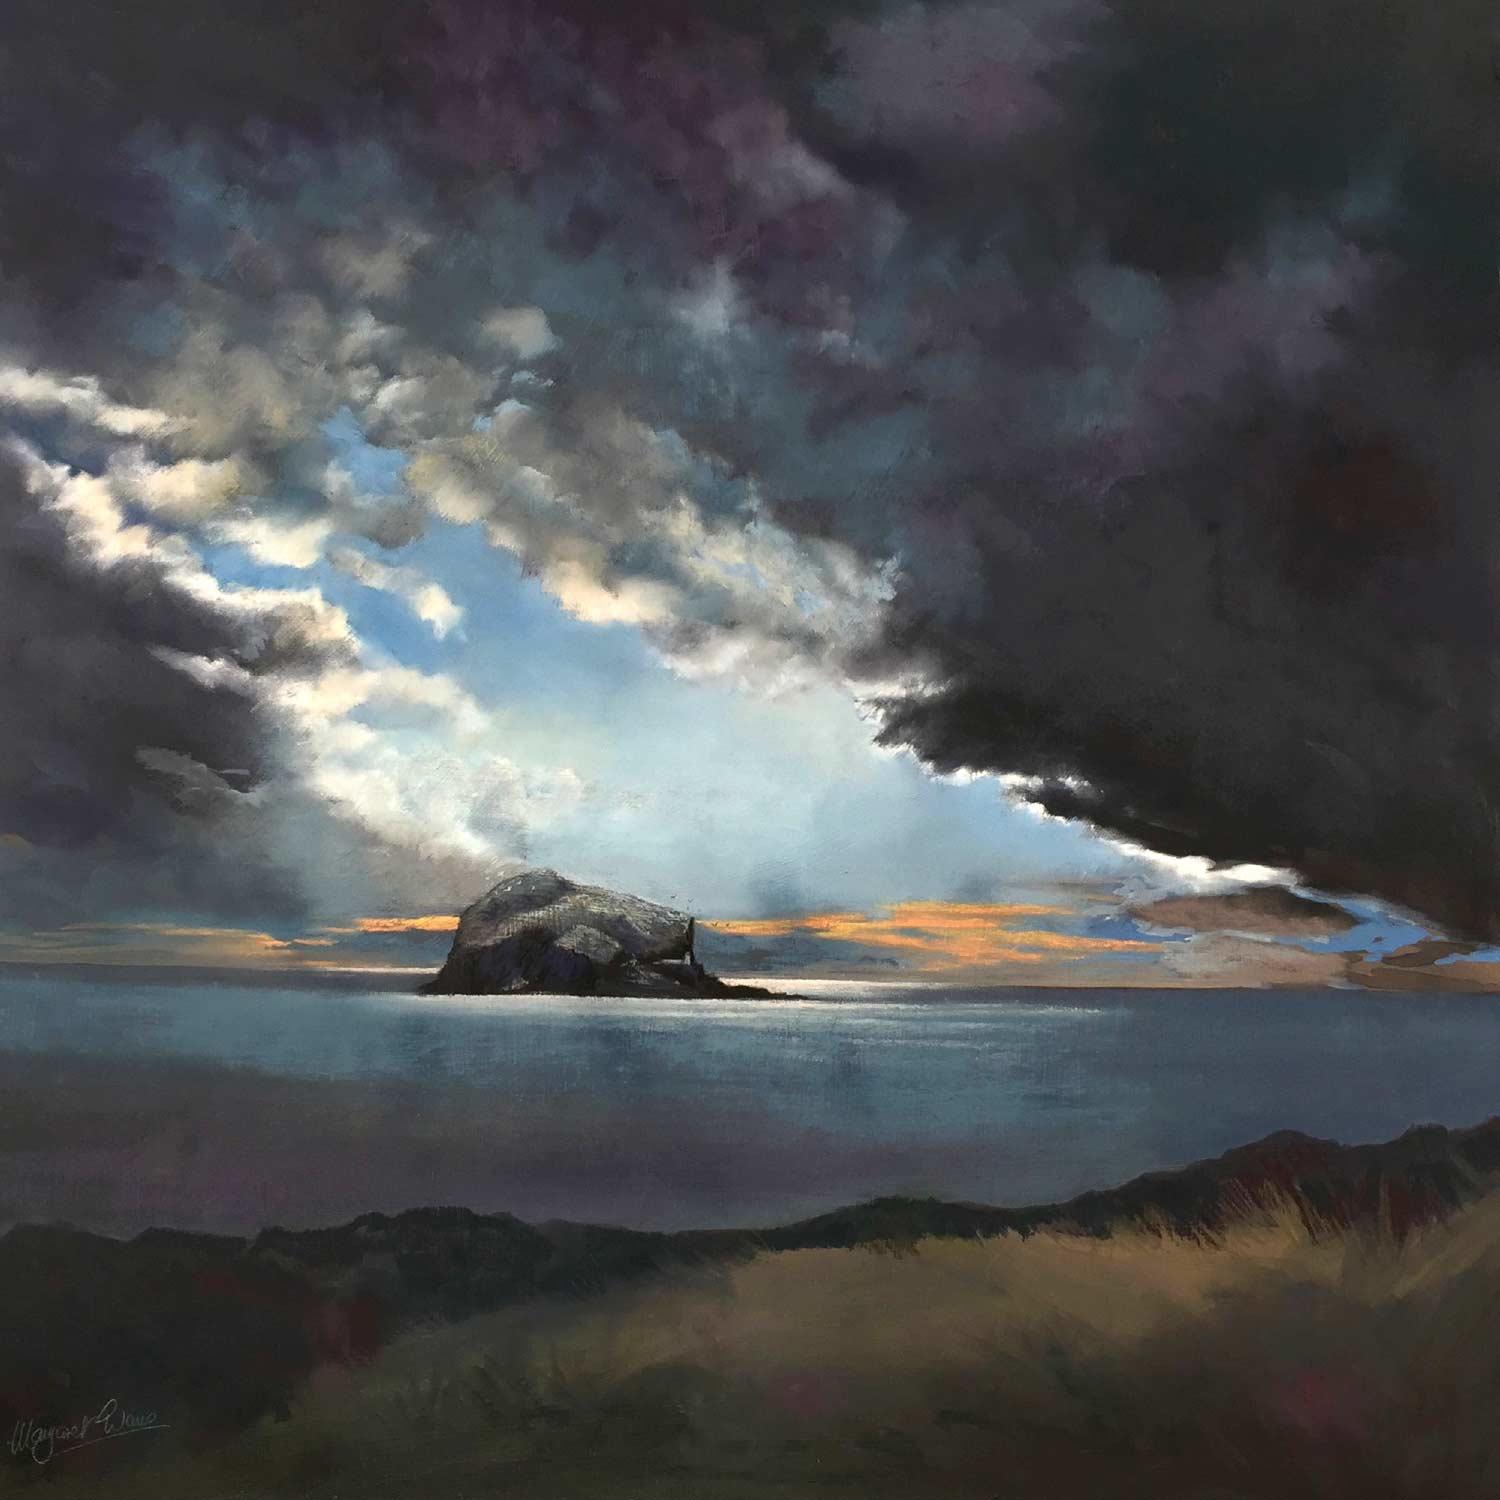 Cloud Break, Bass Rock by Margaret Evans